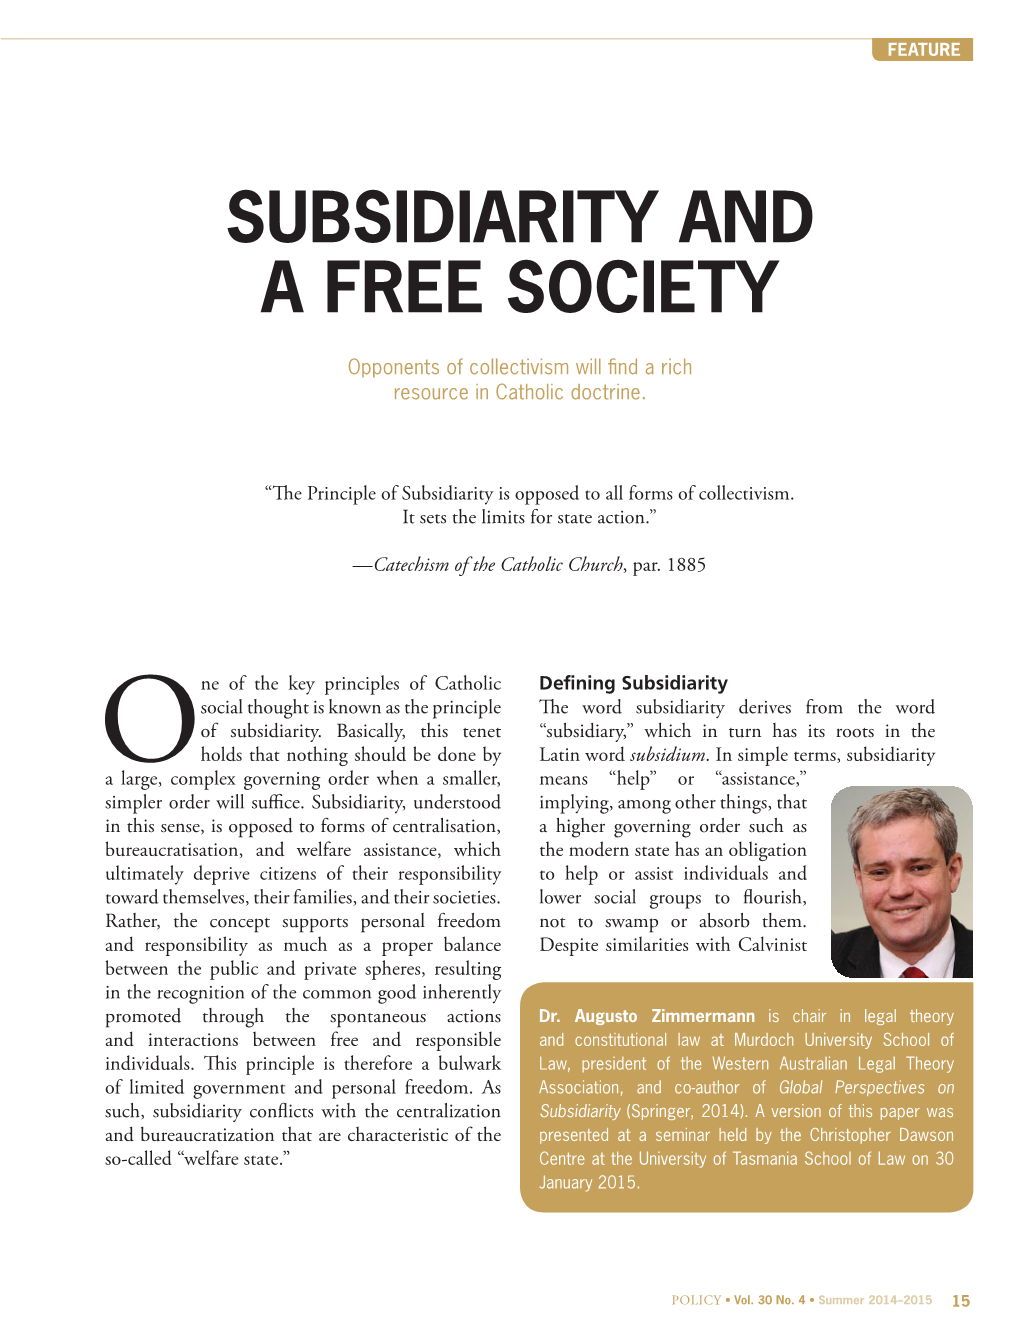 Subsidiarity and a Free Society